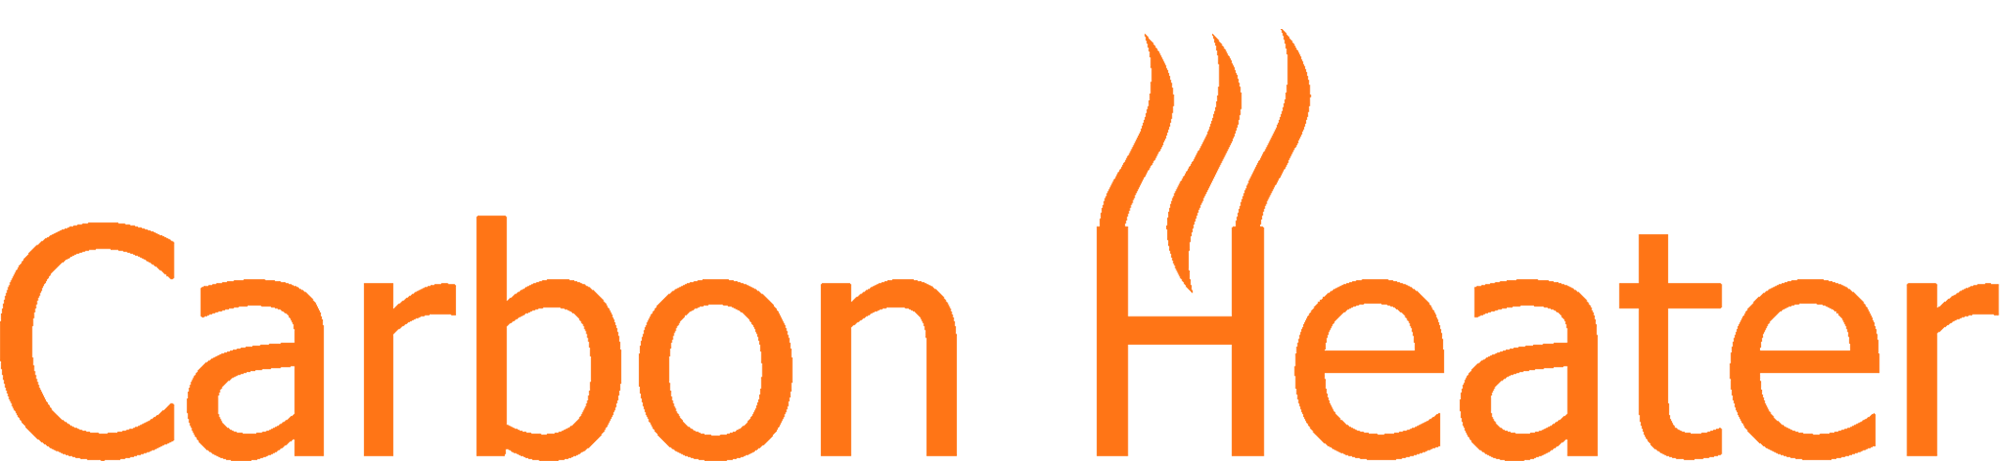 Carbon Heater Logo